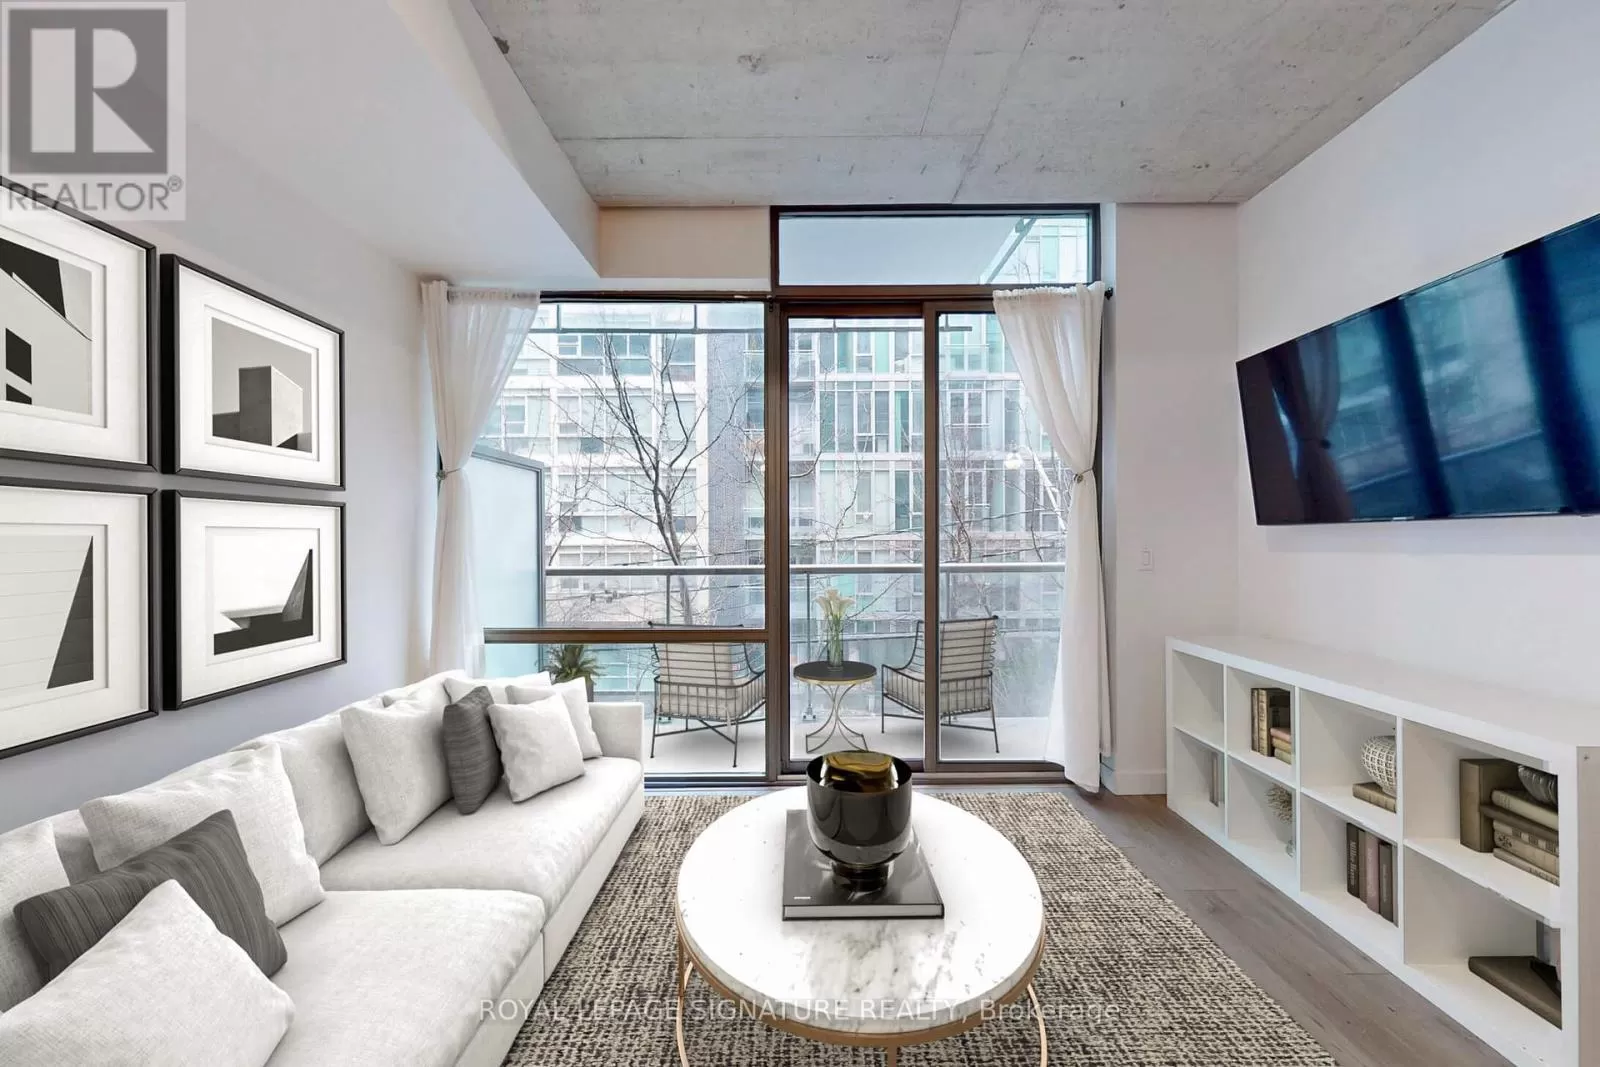 Apartment for rent: 312 - 55 Stewart Street, Toronto, Ontario M5V 2V1